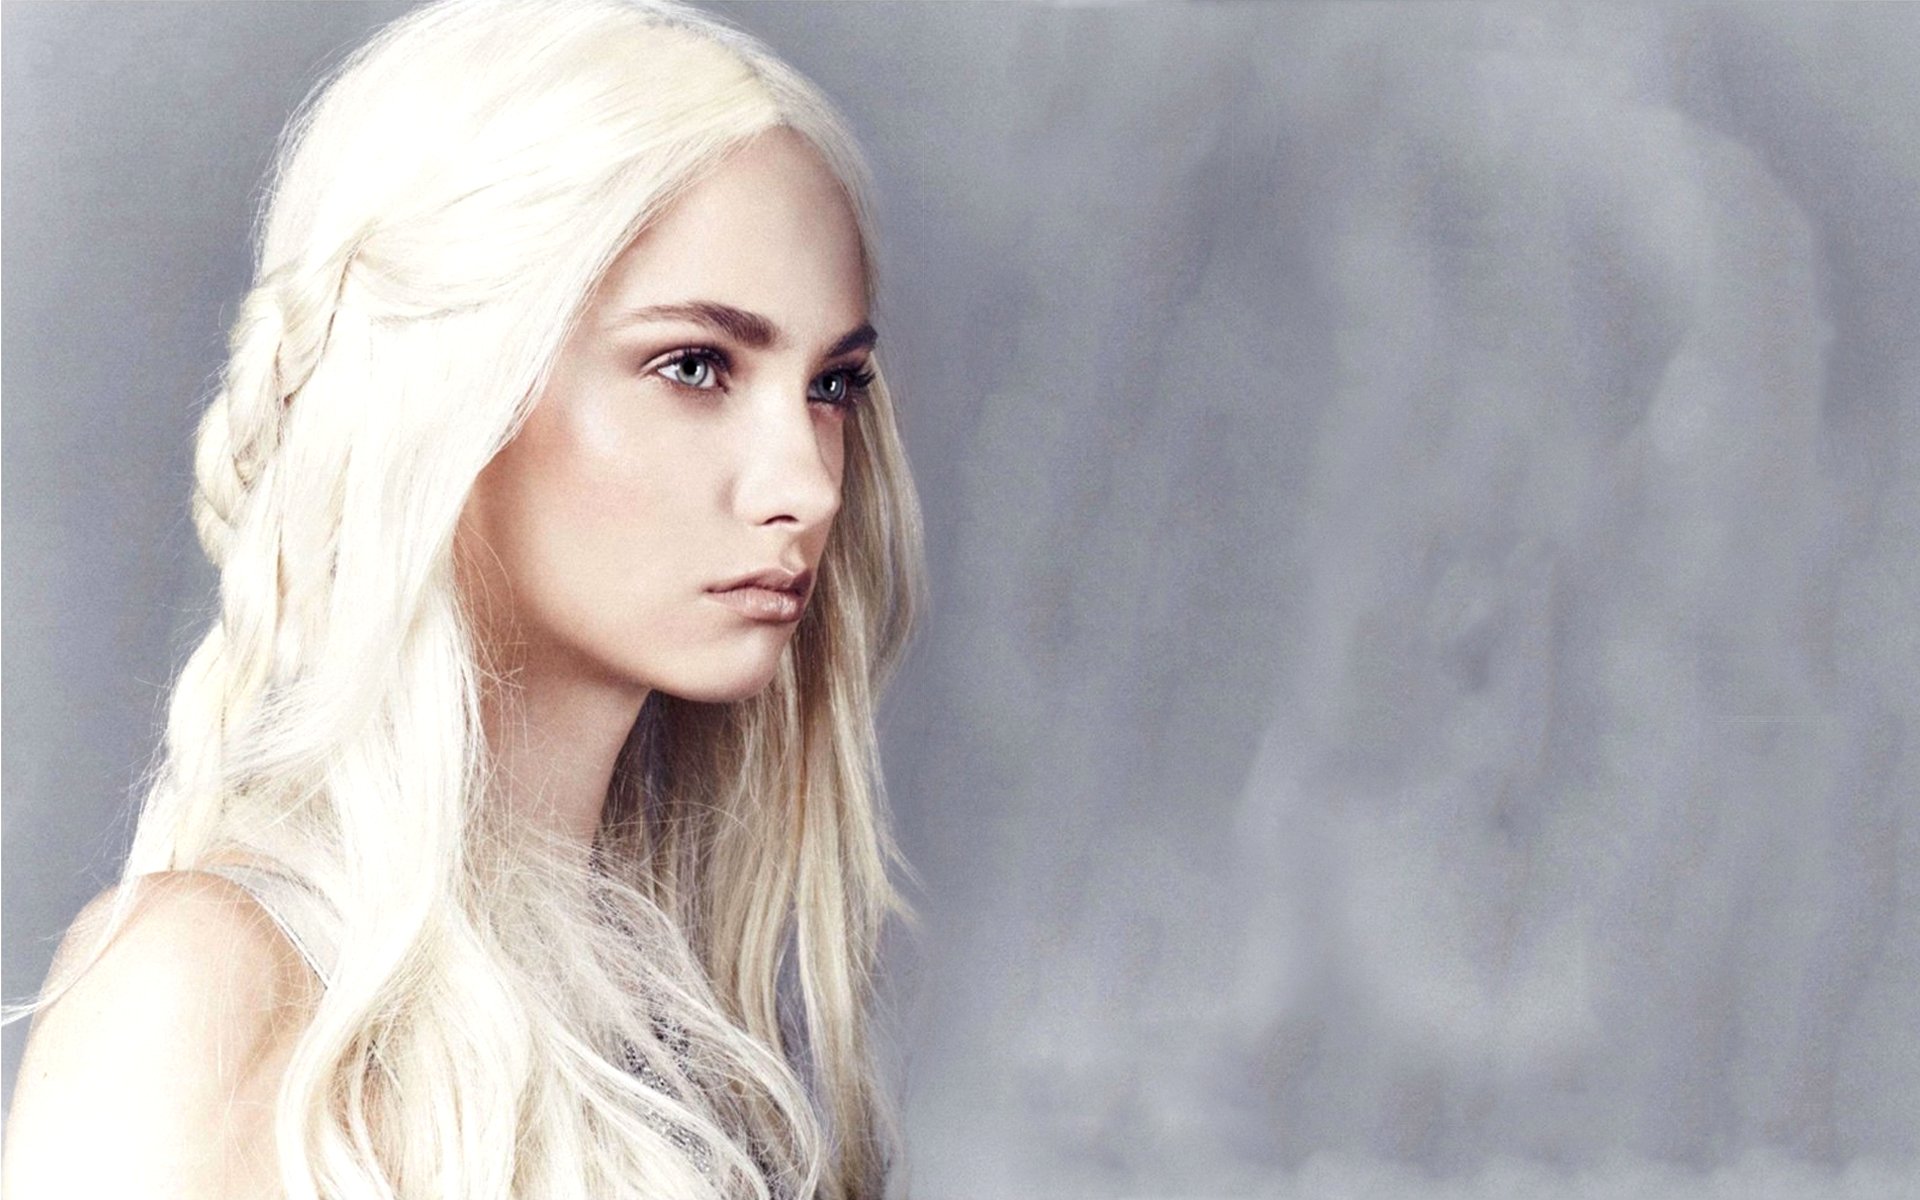 Daenerys Targaryen Cosplay wallpaper   ForWallpapercom